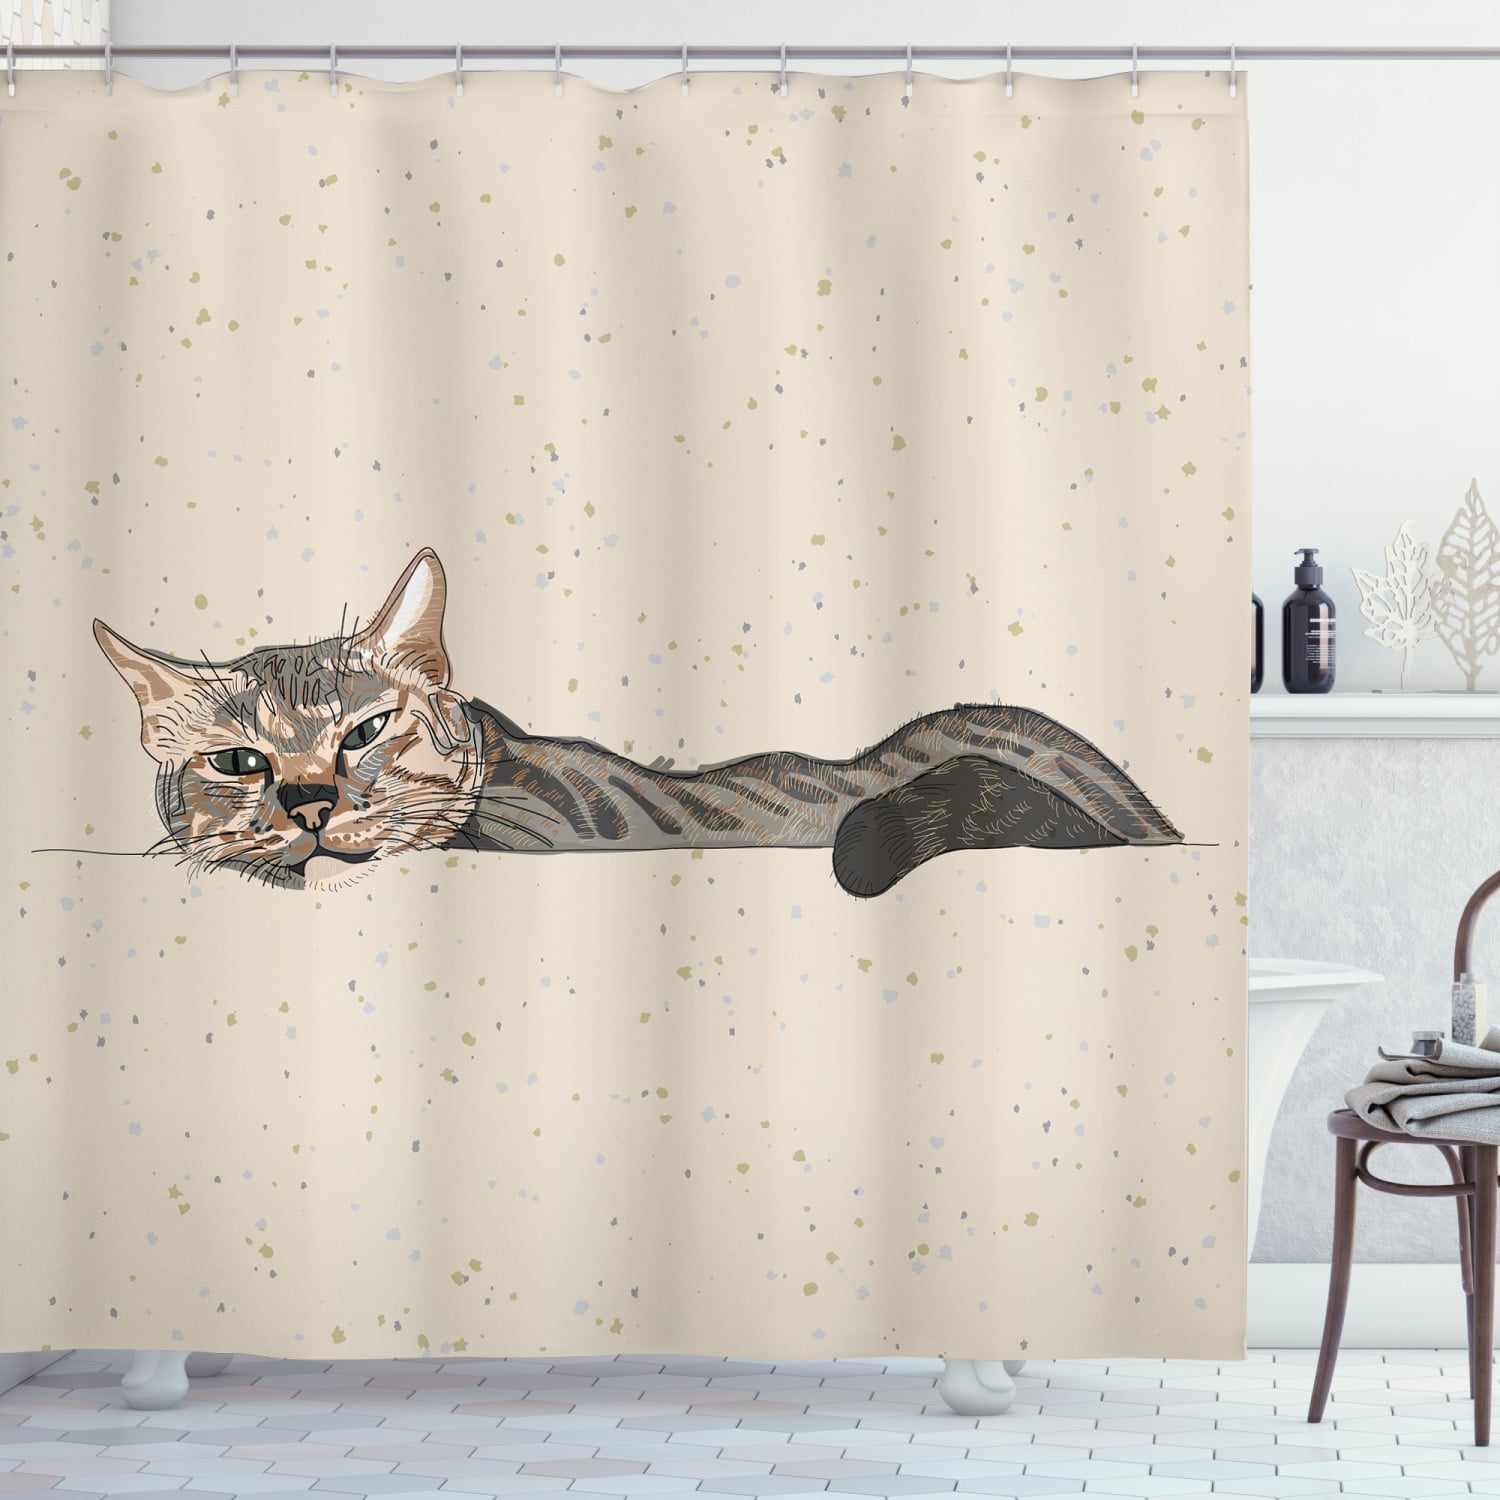 Cute Funny Cats Shower Curtain Liner Waterproof Fabric Bathroom Decor Mat Hooks 